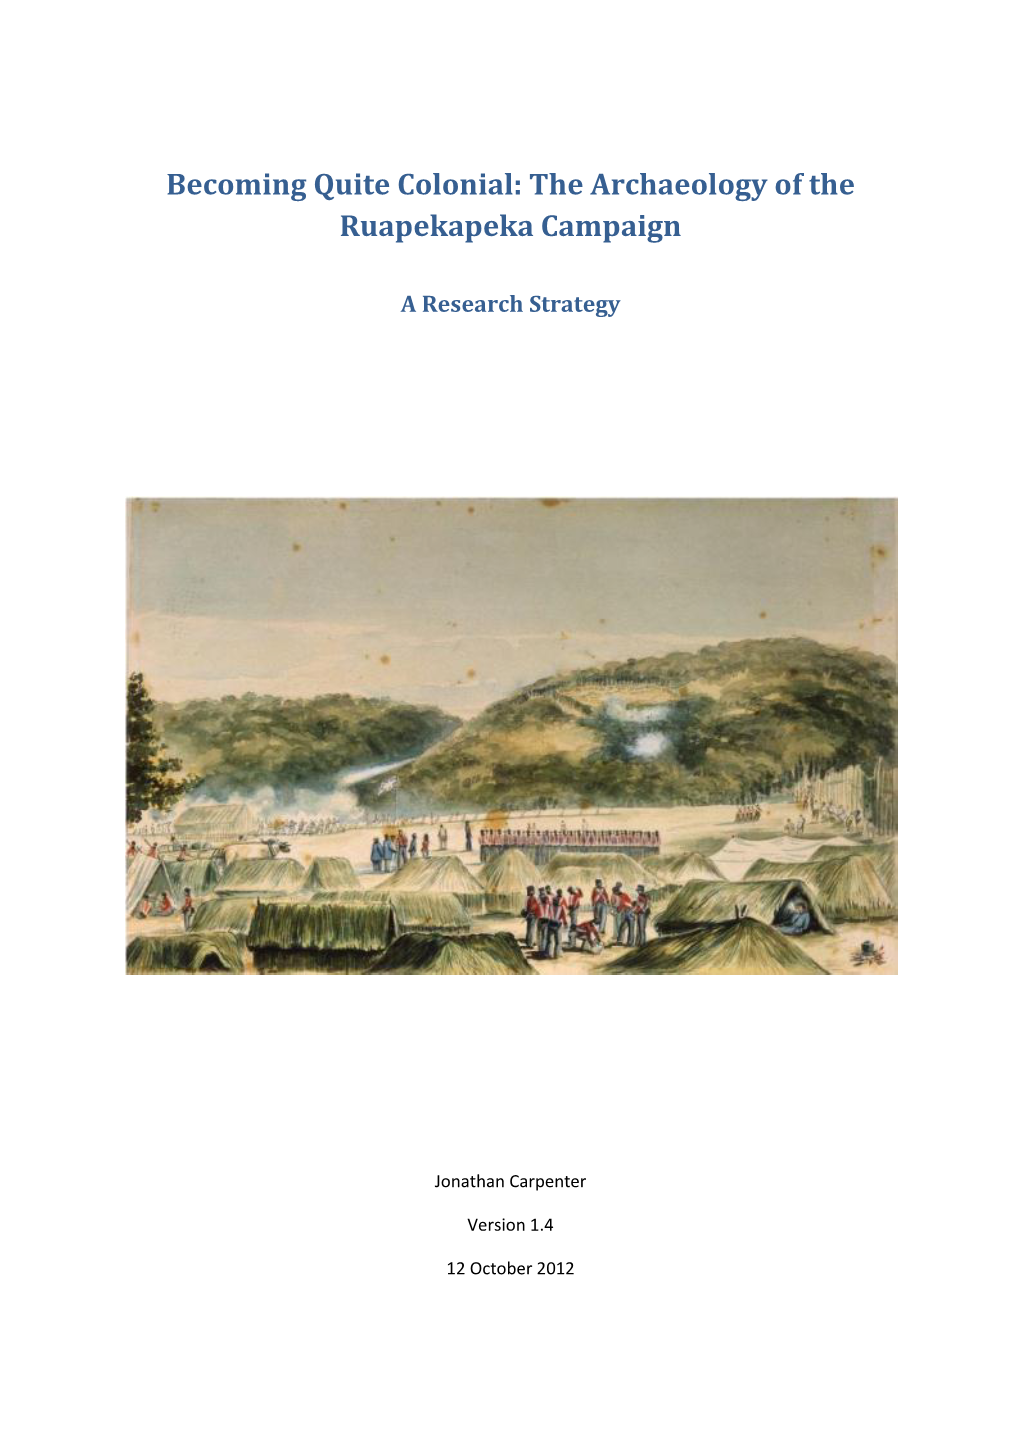 The Archaeology of the Ruapekapeka Campaign